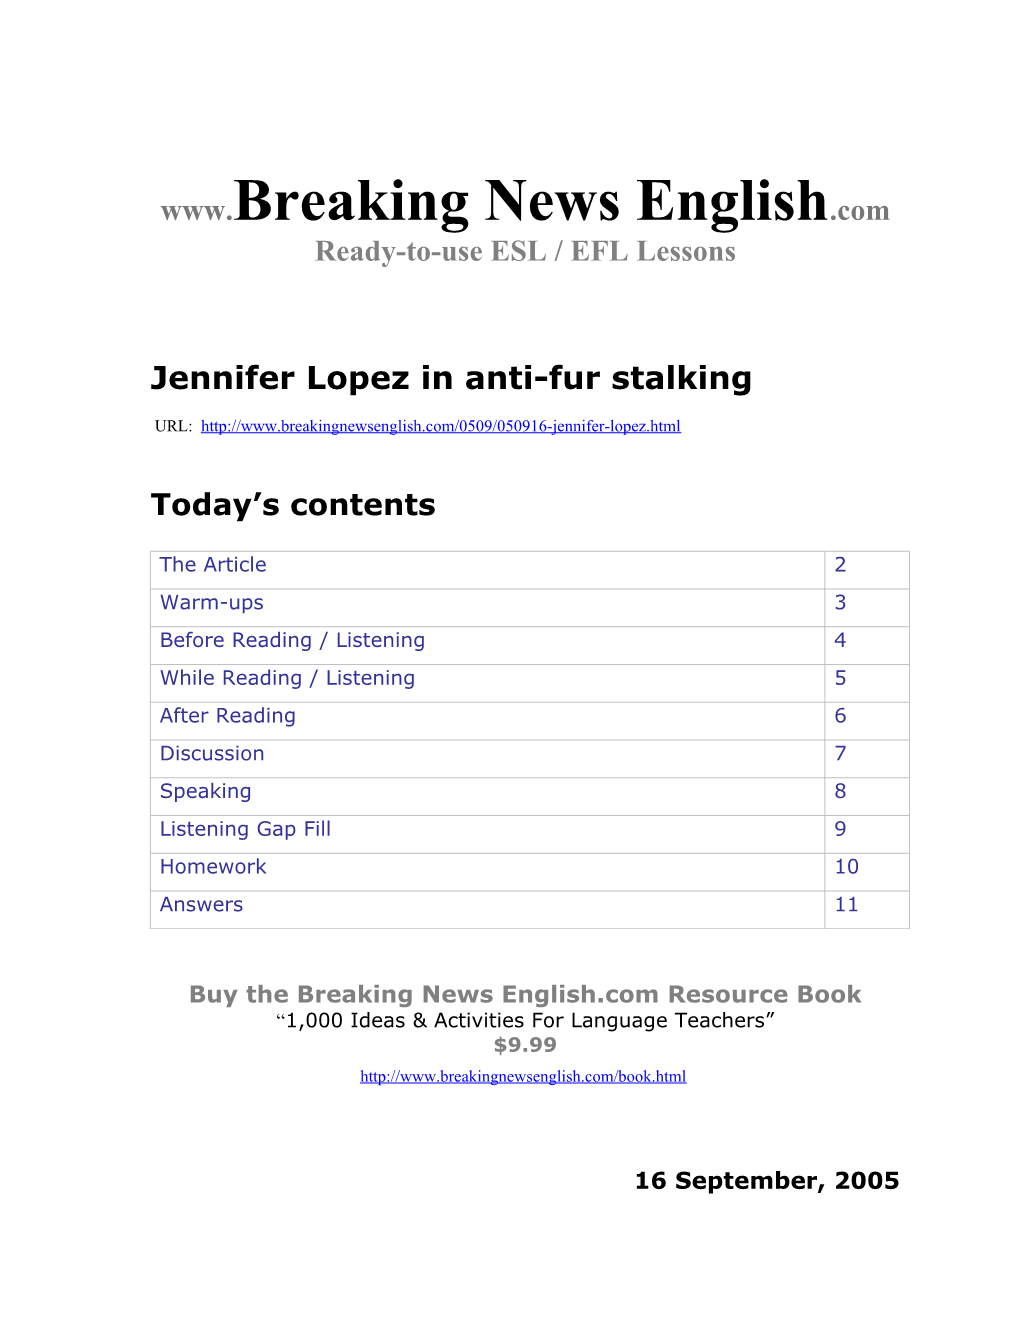 Jennifer Lopez in Anti-Fur Stalking